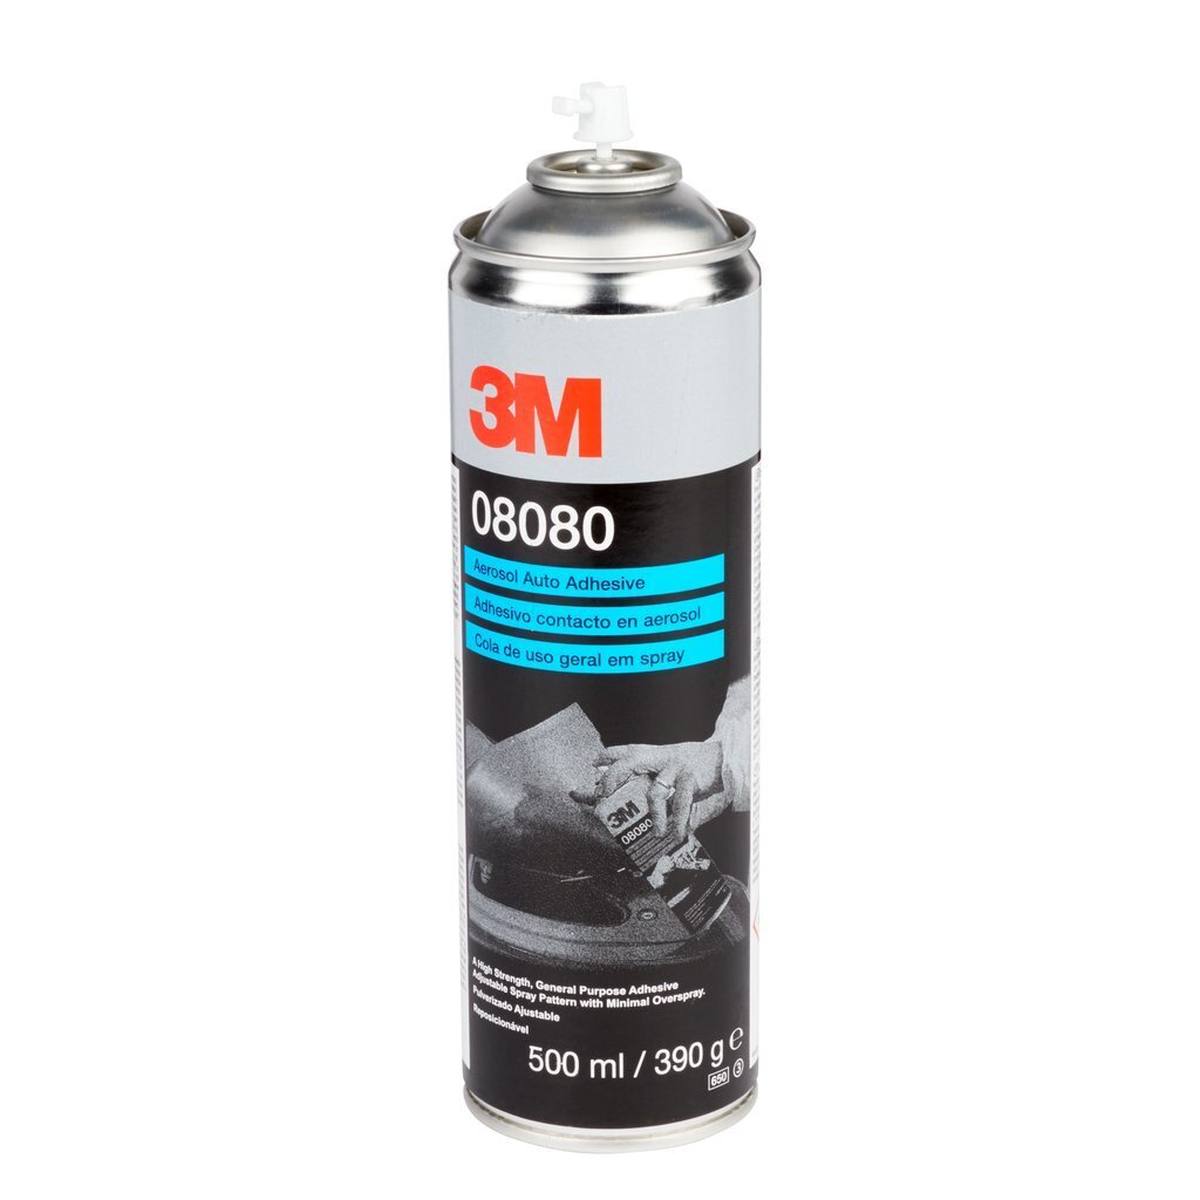 3M Car body adhesive spray, 500 ml #08080